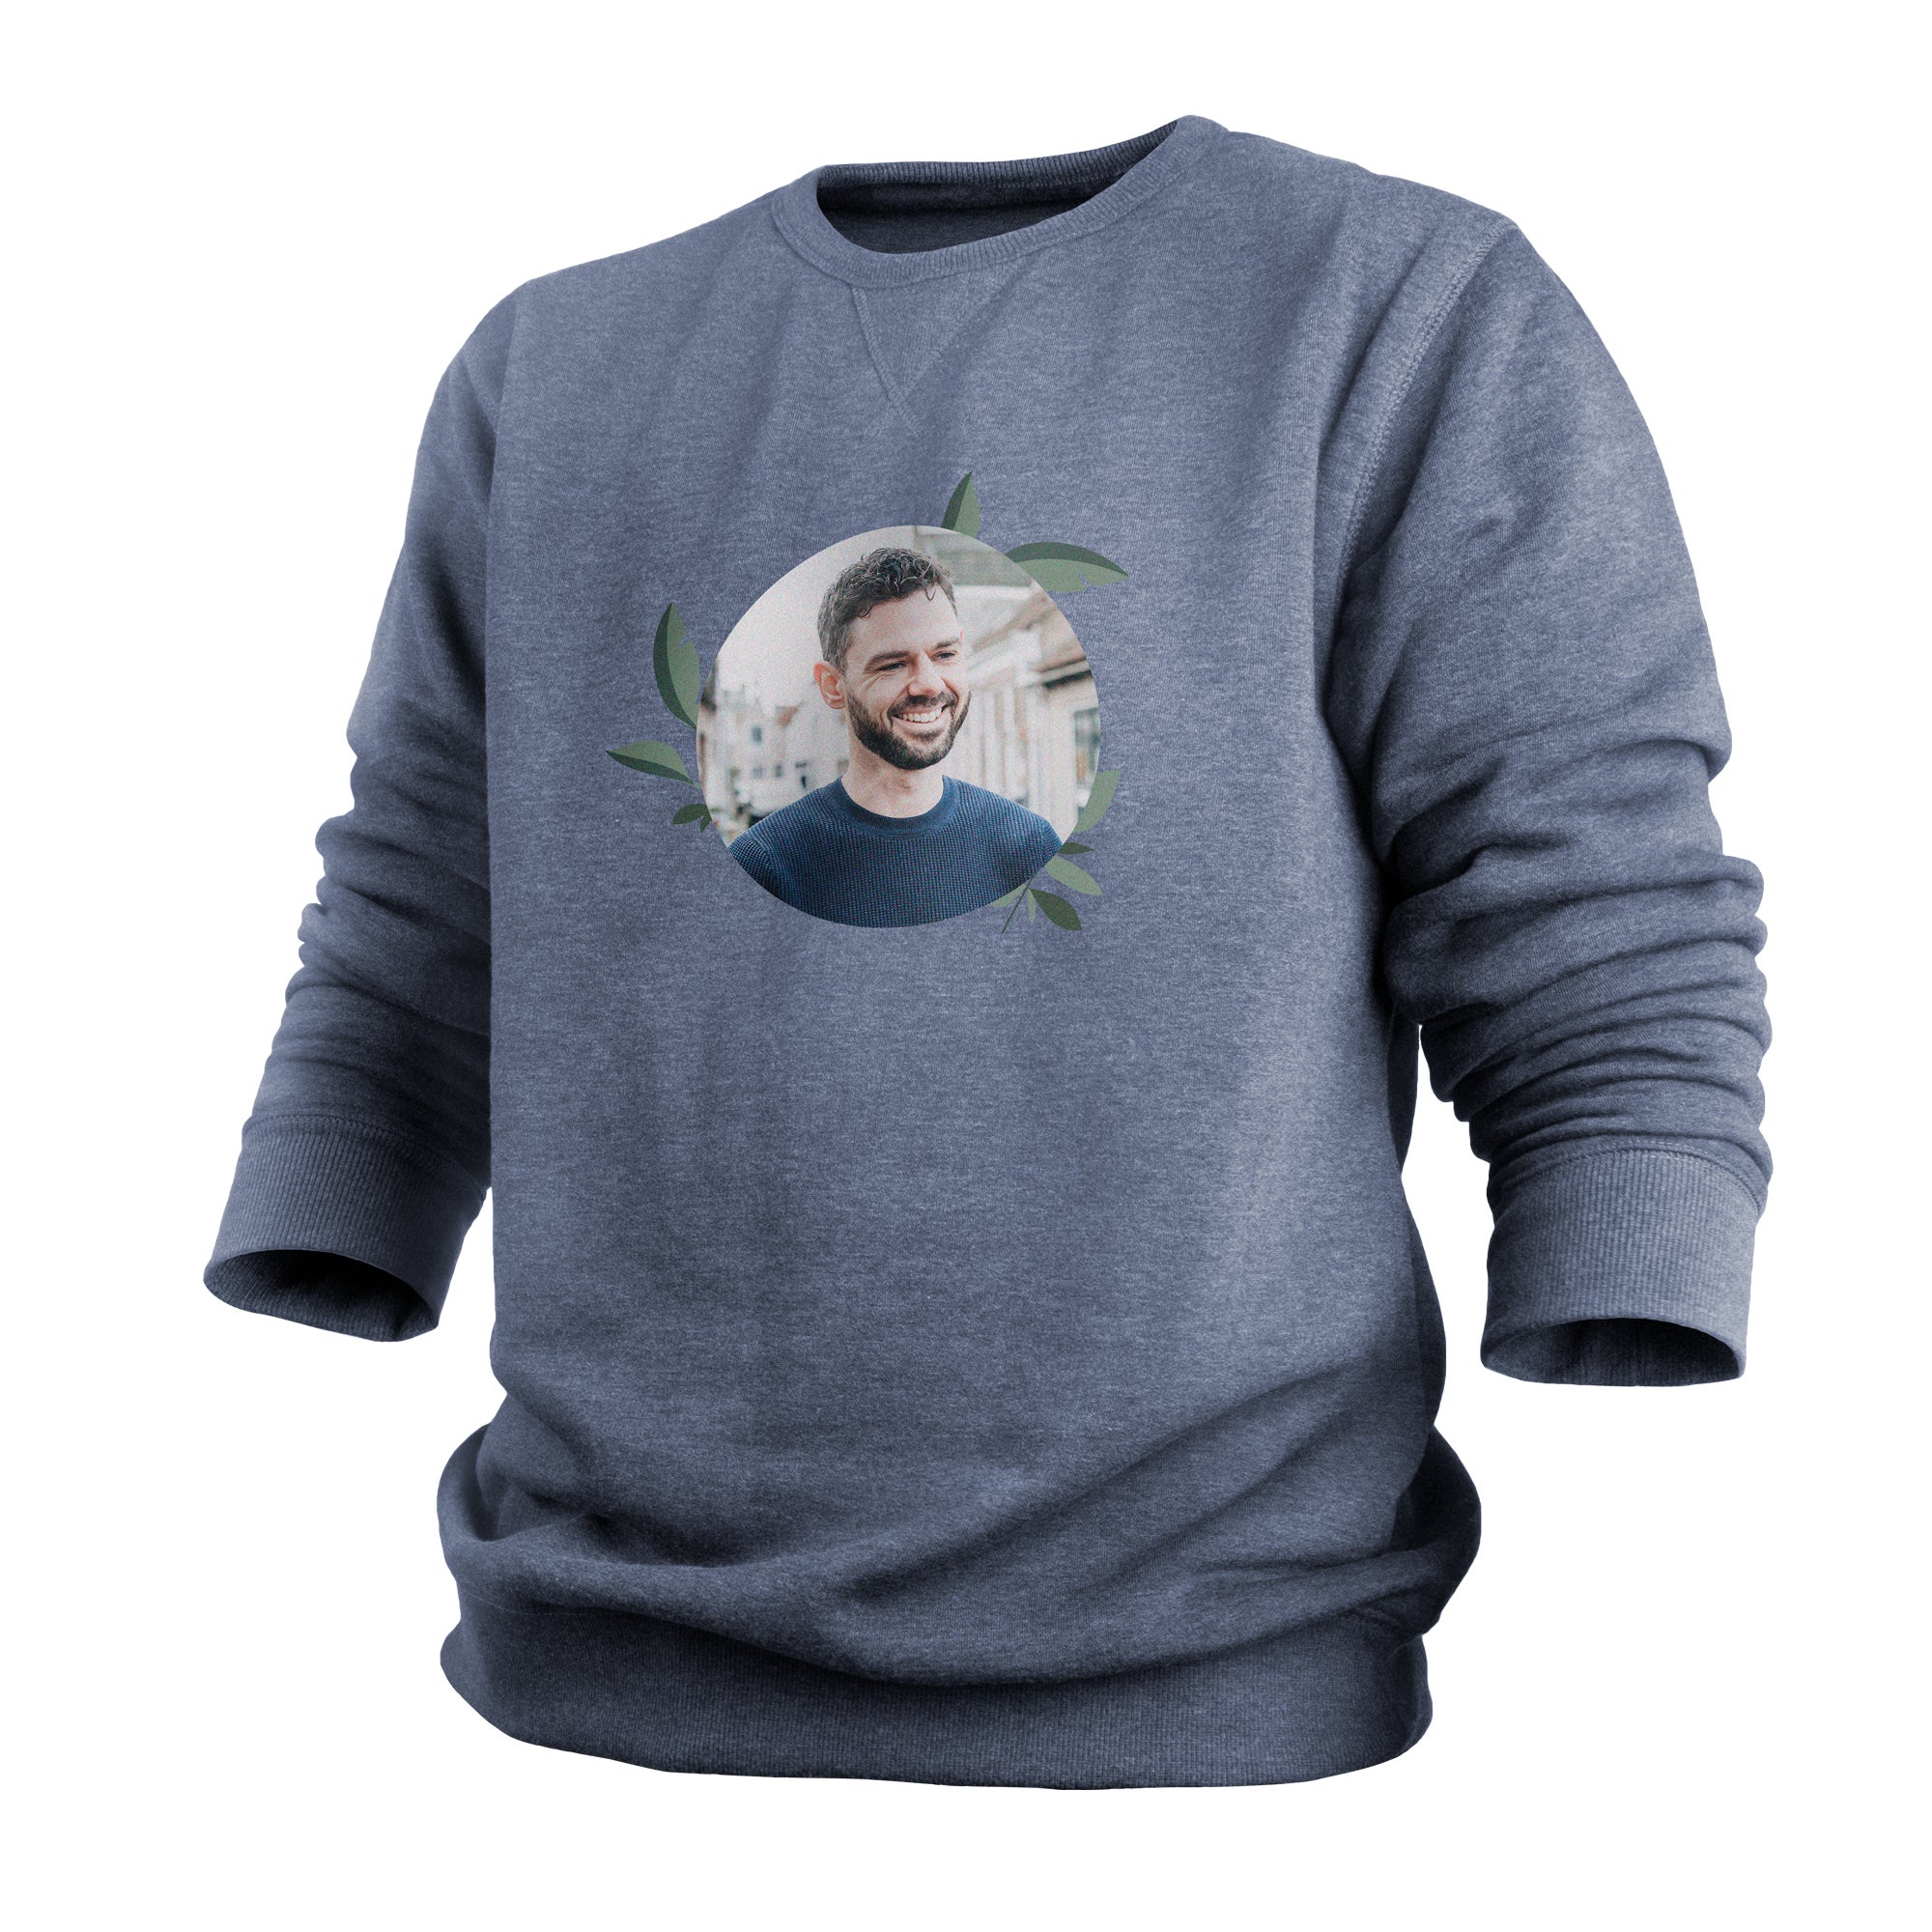 Personalised sweater - Men - Indigo - XL